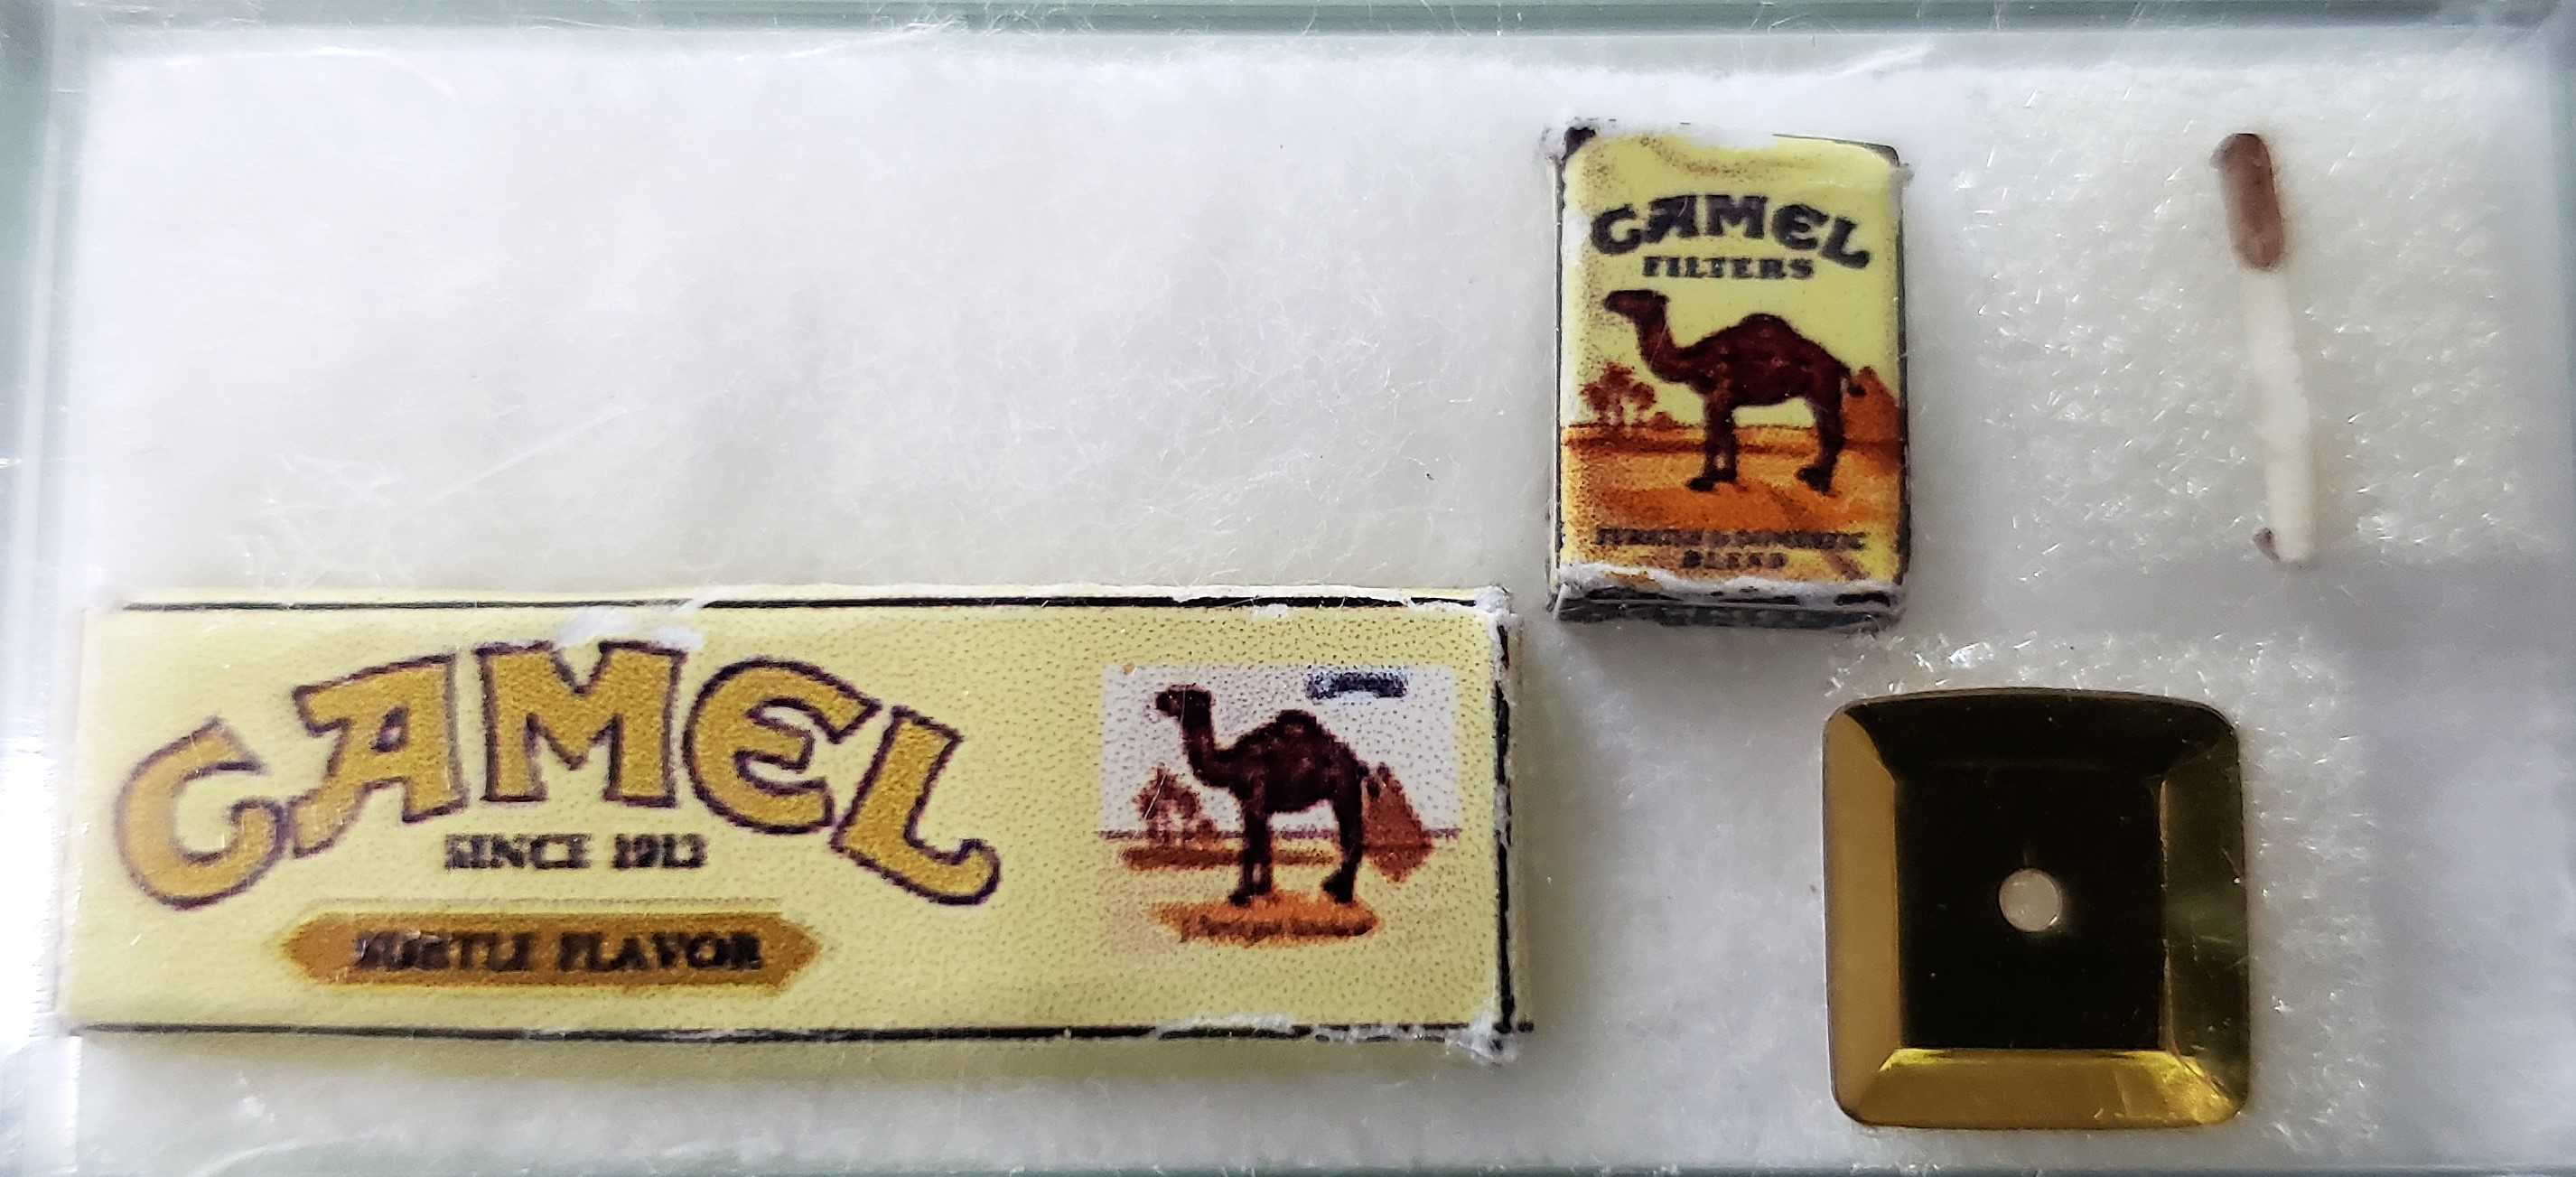 Carton & Pack of Camel Cigarettes w/ Ashtray